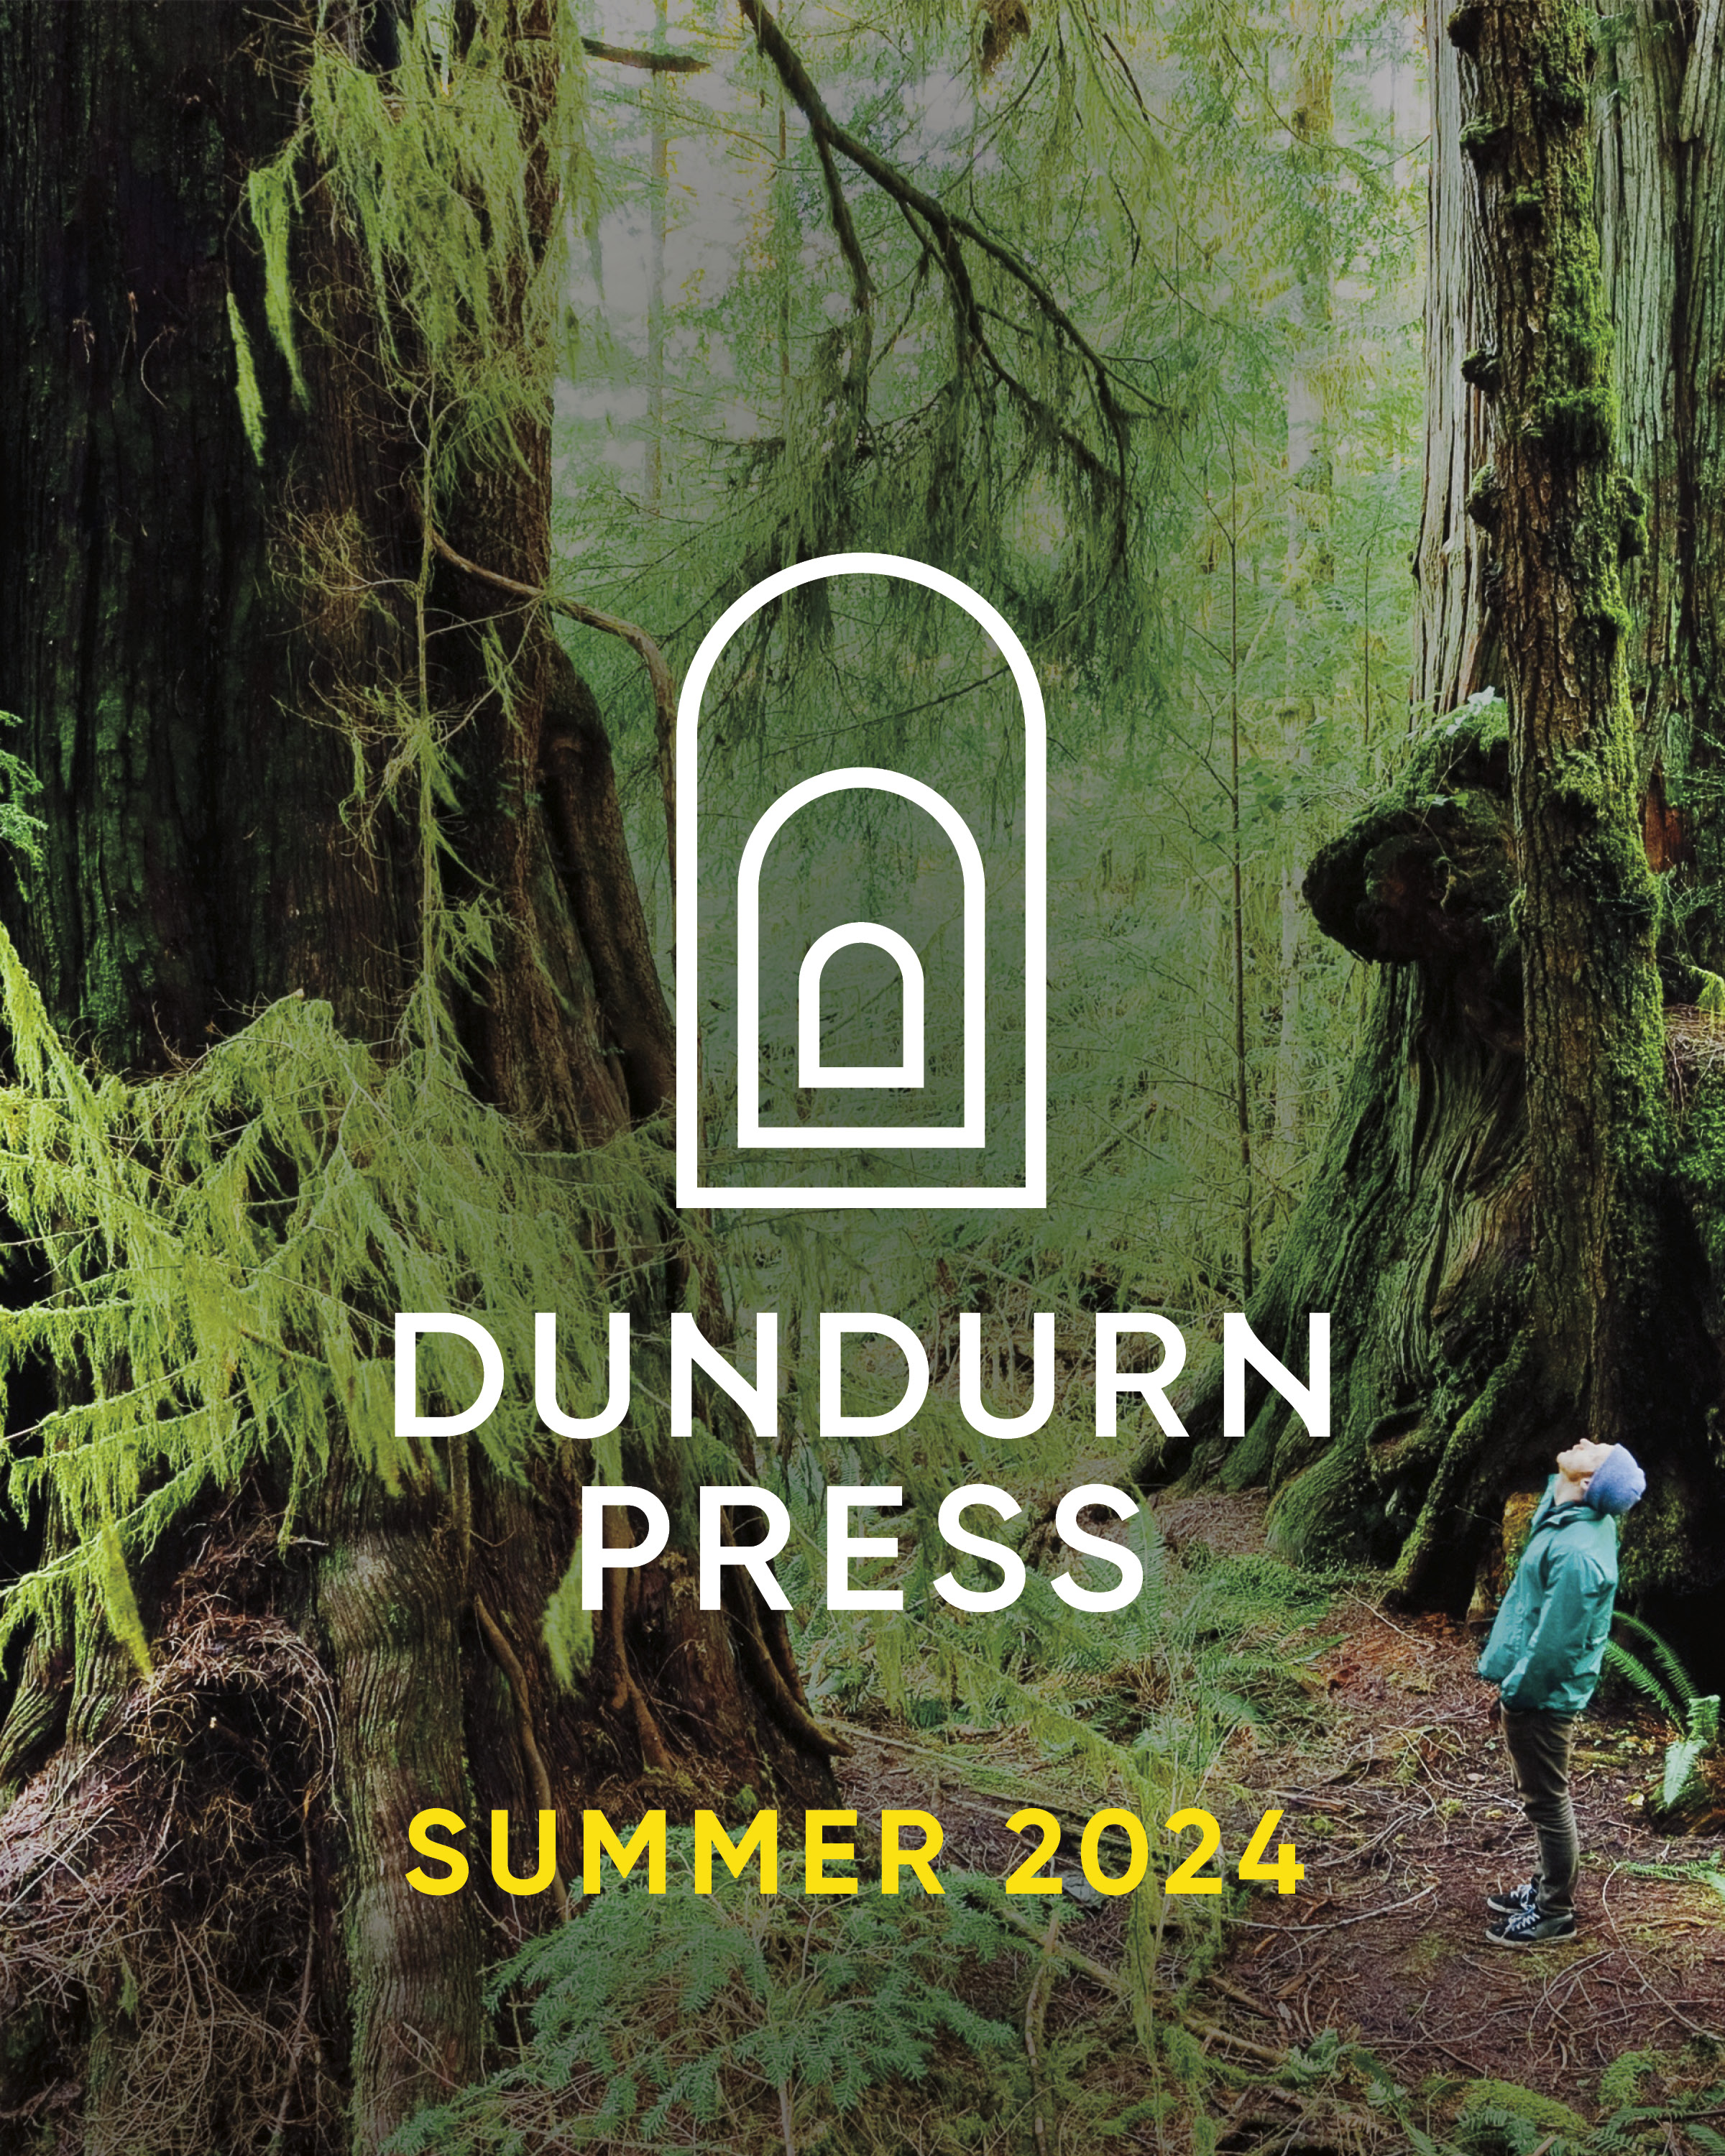 Download the Dundurn Press Summer 2024 Catalogue